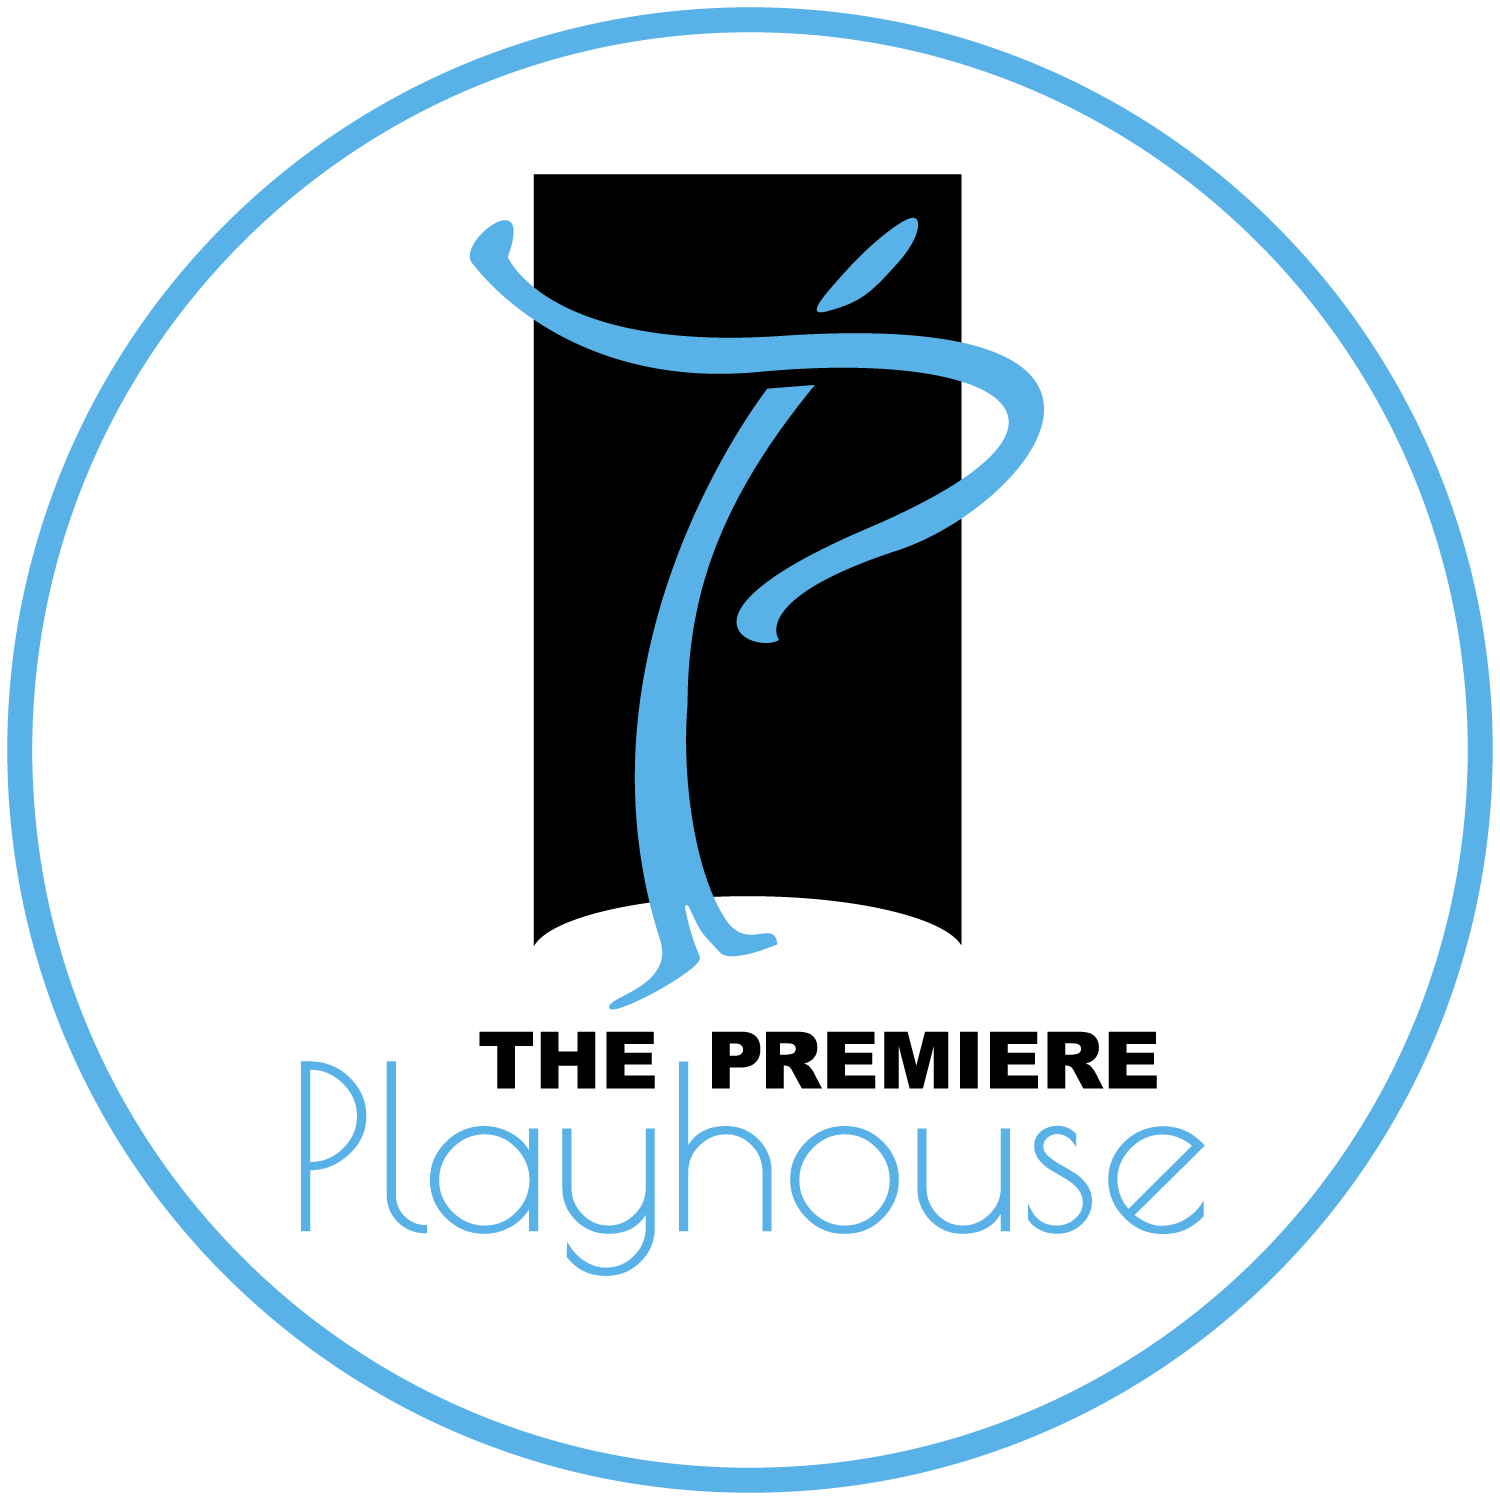 The Premiere Playhouse logo